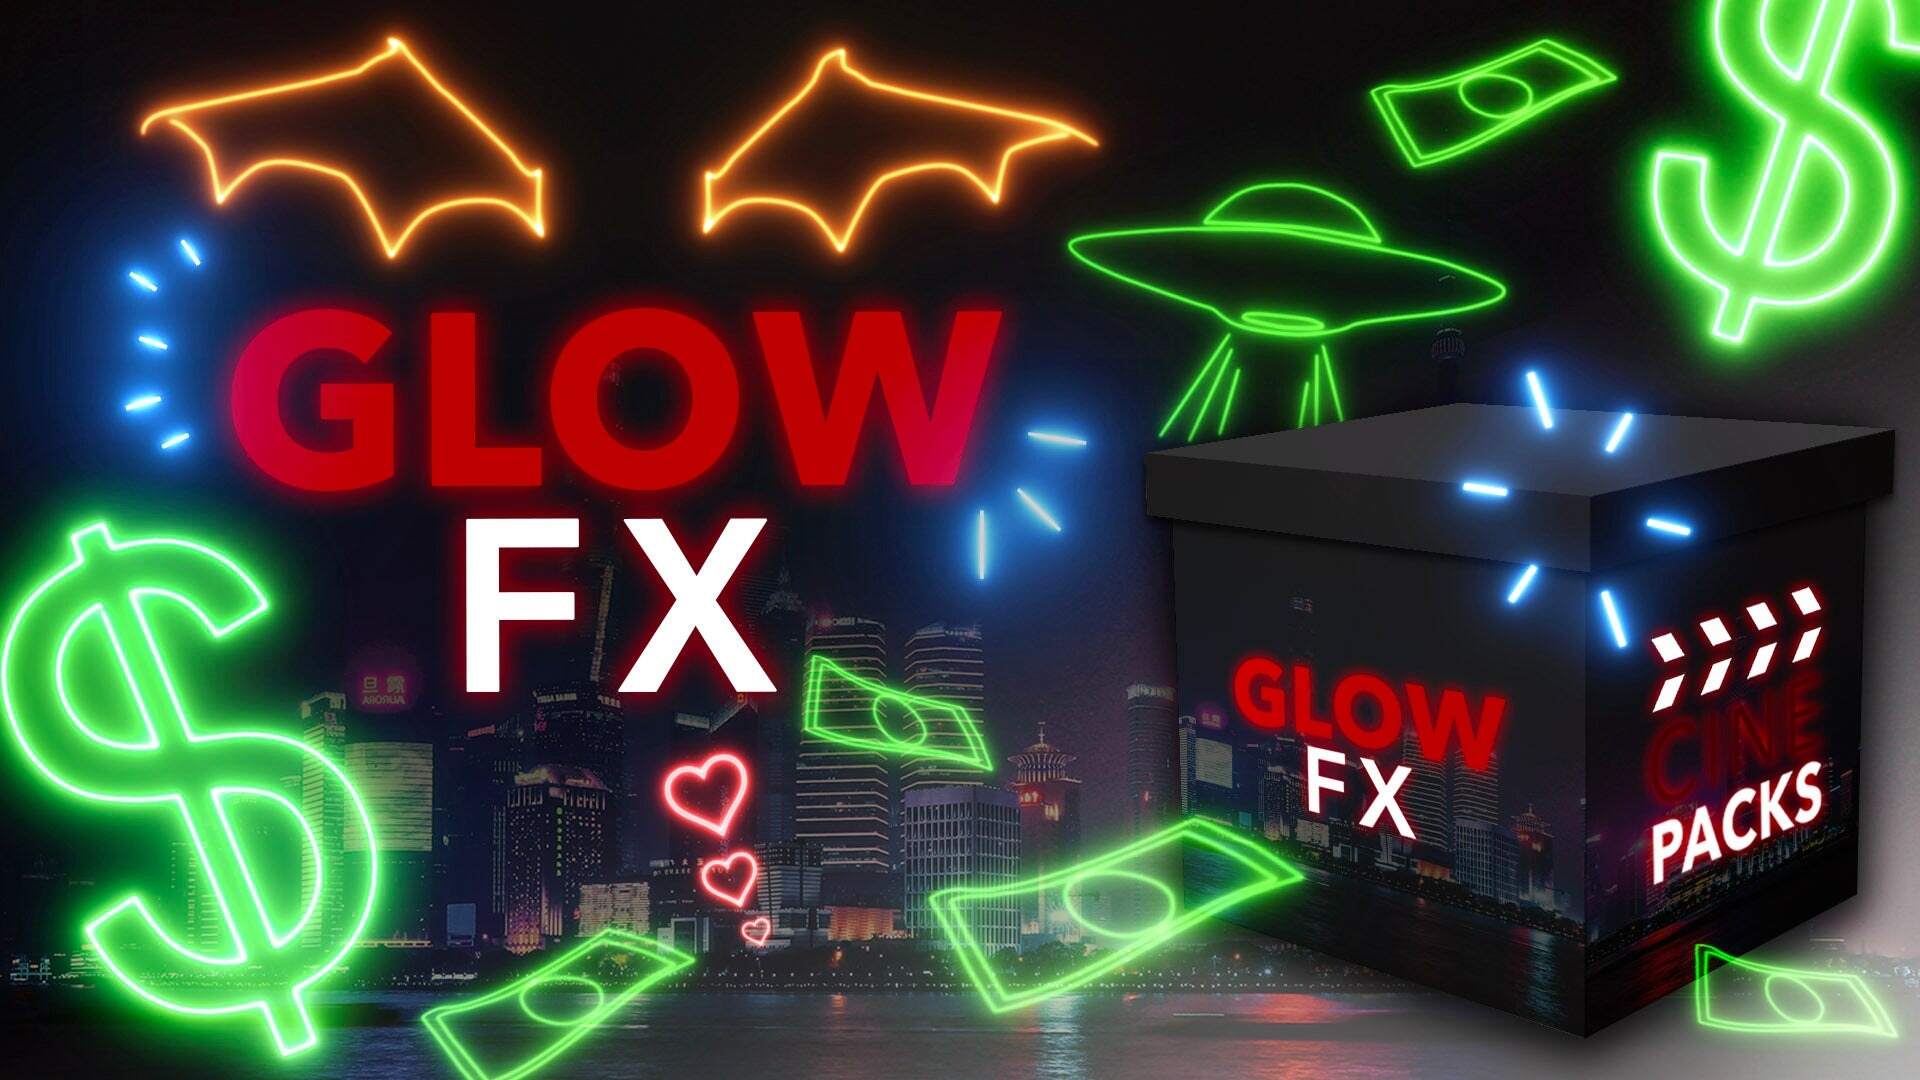 CinePacks - Glow FX